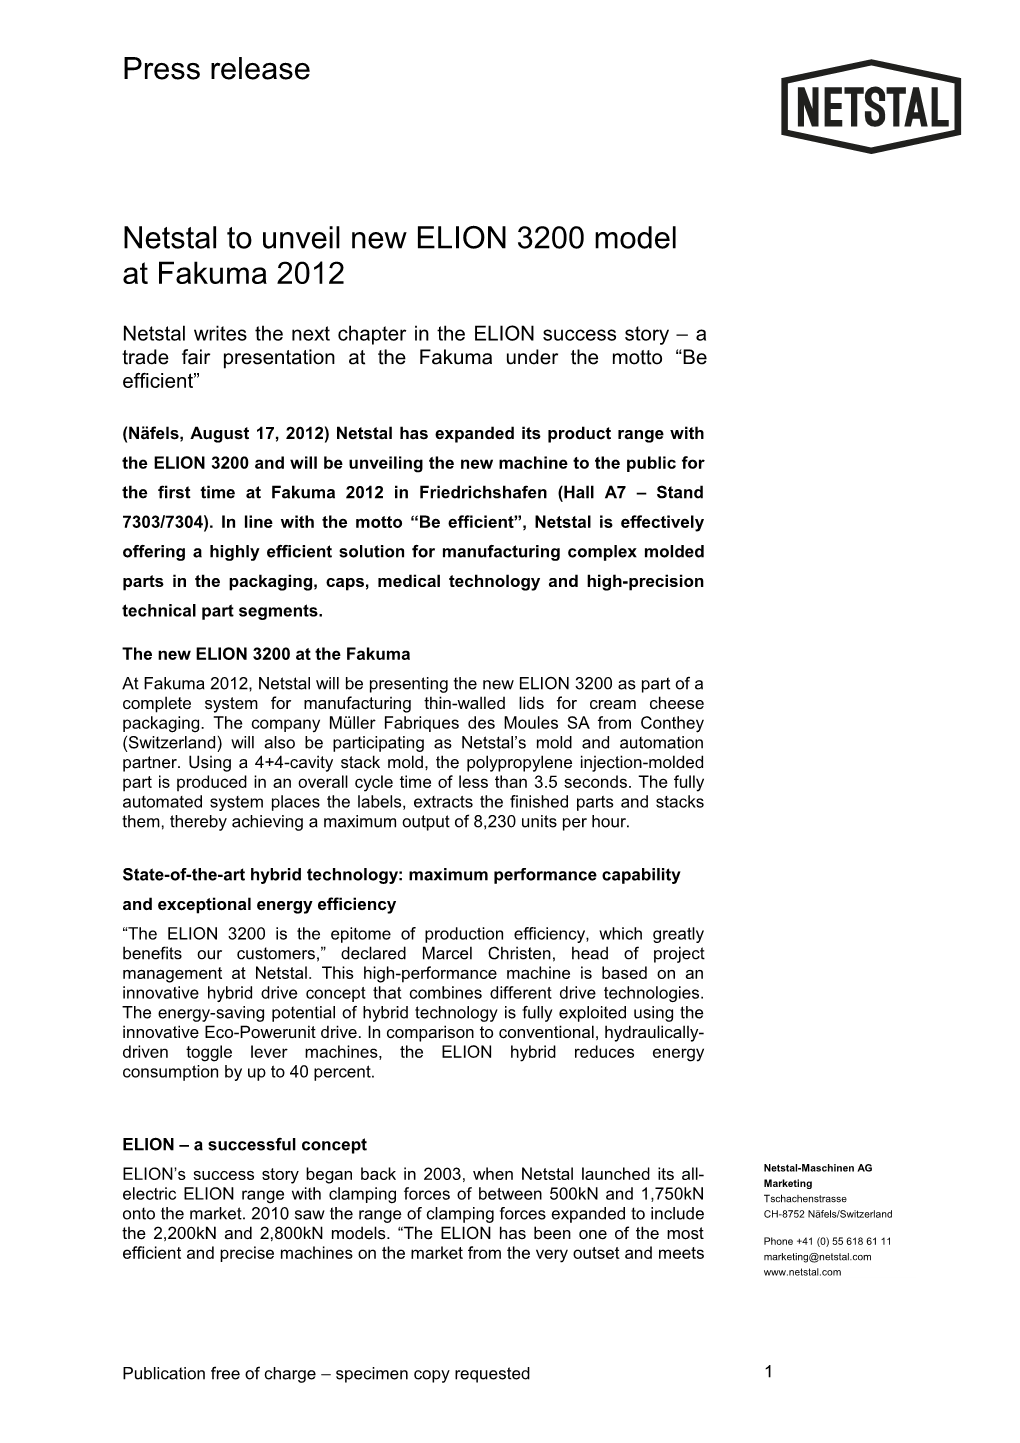 Netstal to Unveil New ELION 3200 Model at Fakuma 2012